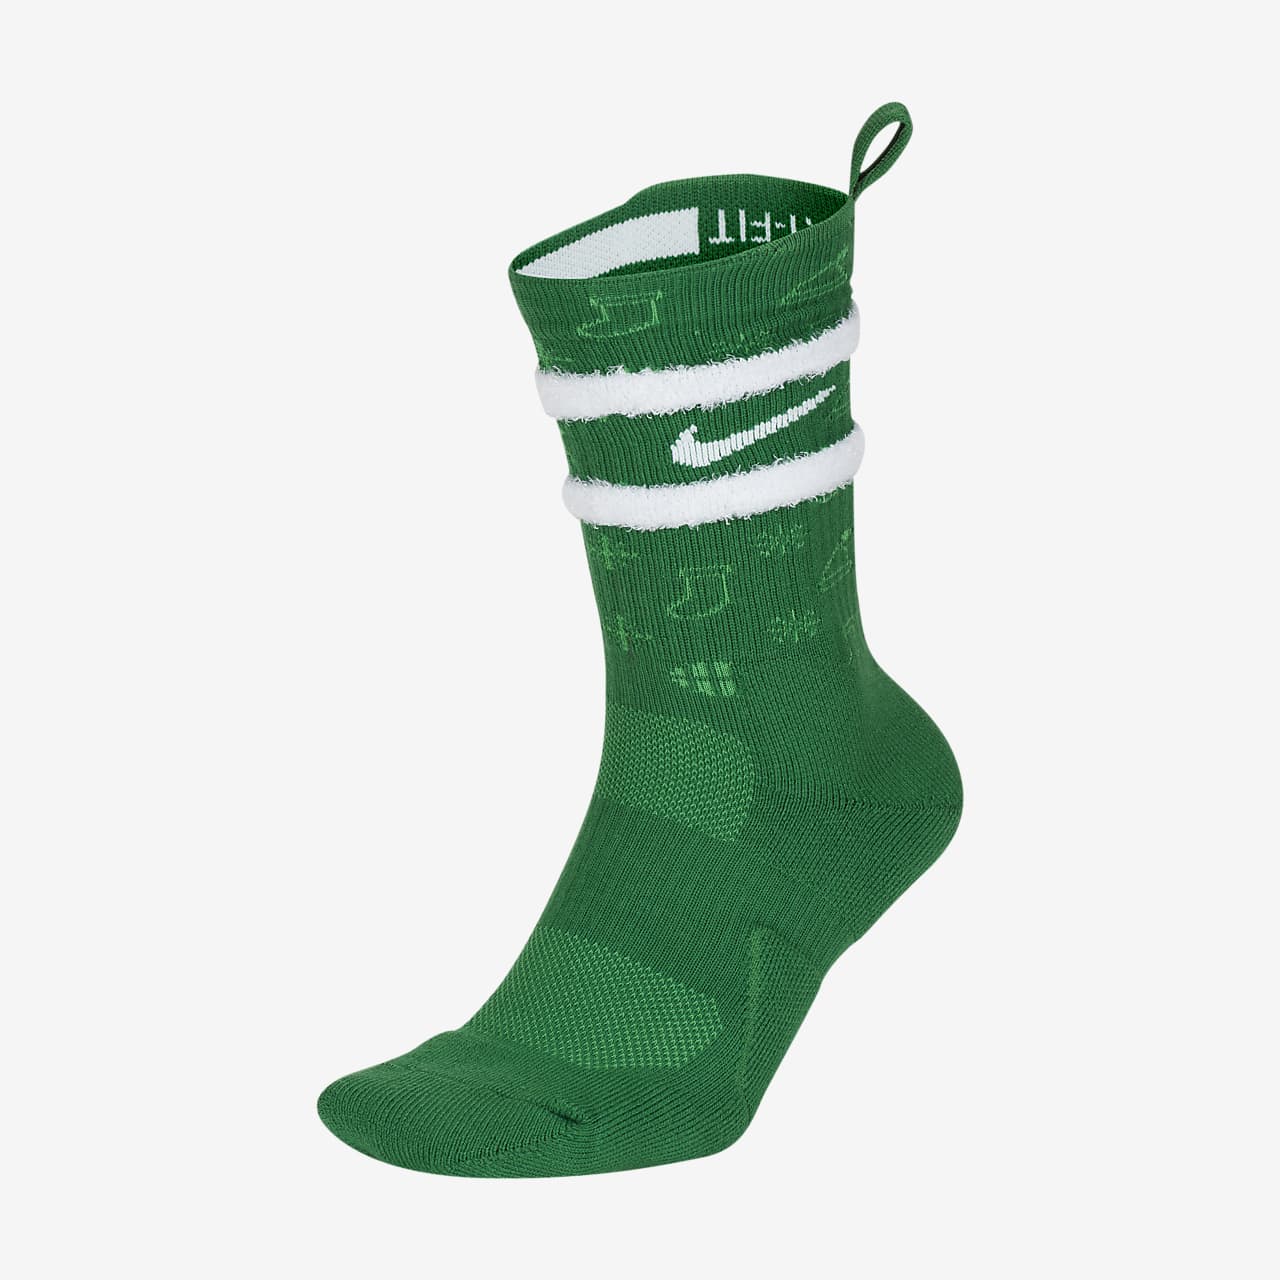 nike elite basketball socks sale